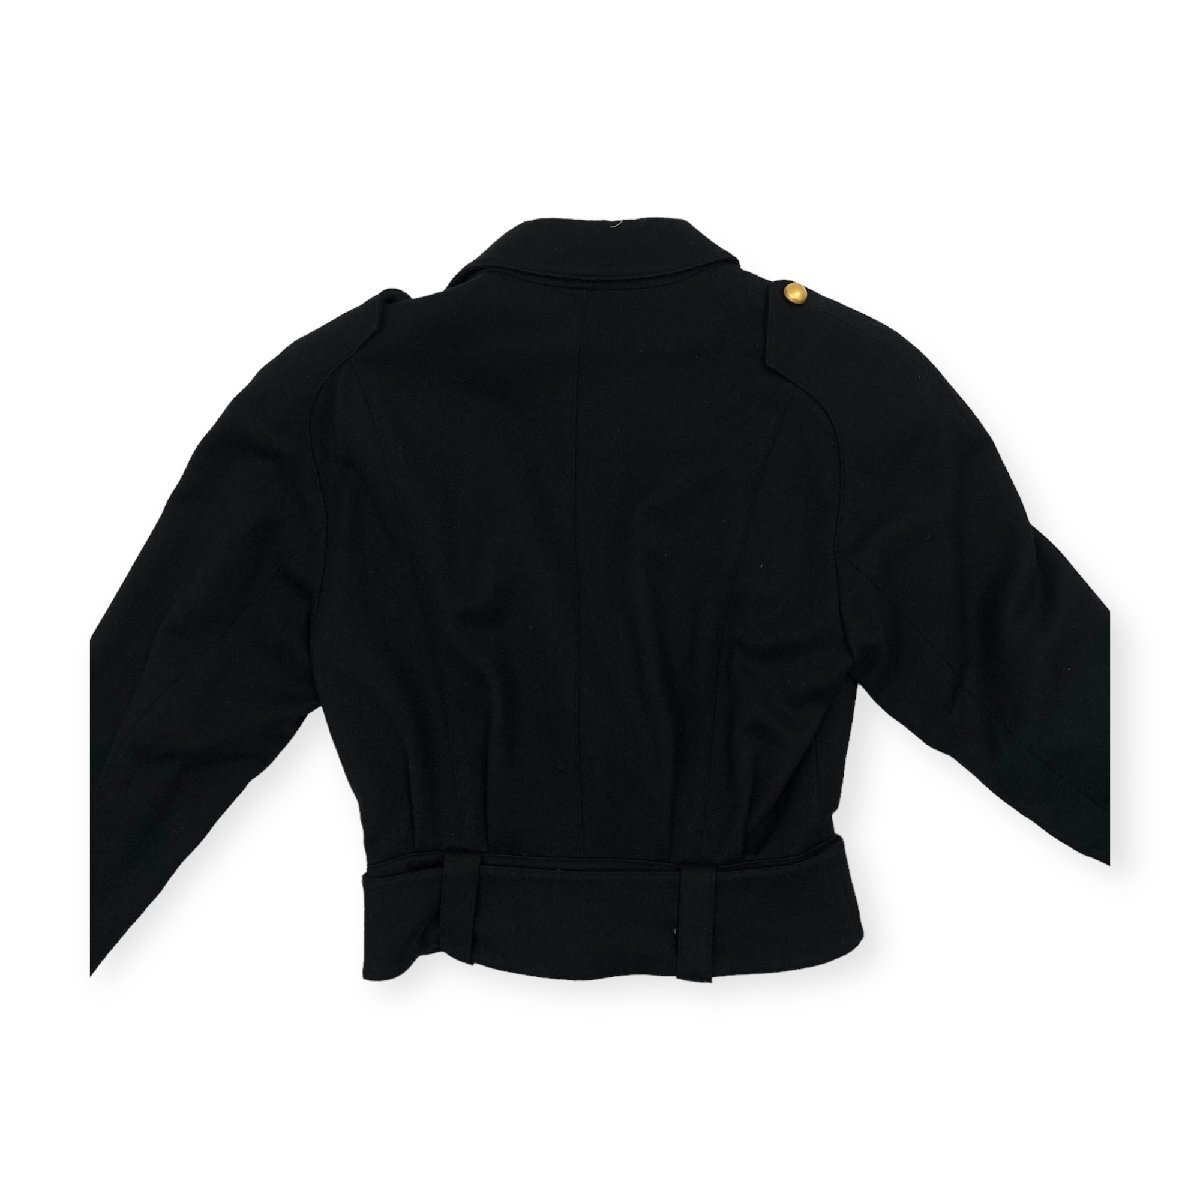 49 AV JUNKO SHIMADA ジュンコシマダ デザイン ウールジャケット ベルト付き サイズ 9 /ブラック レディース 日本製_画像4